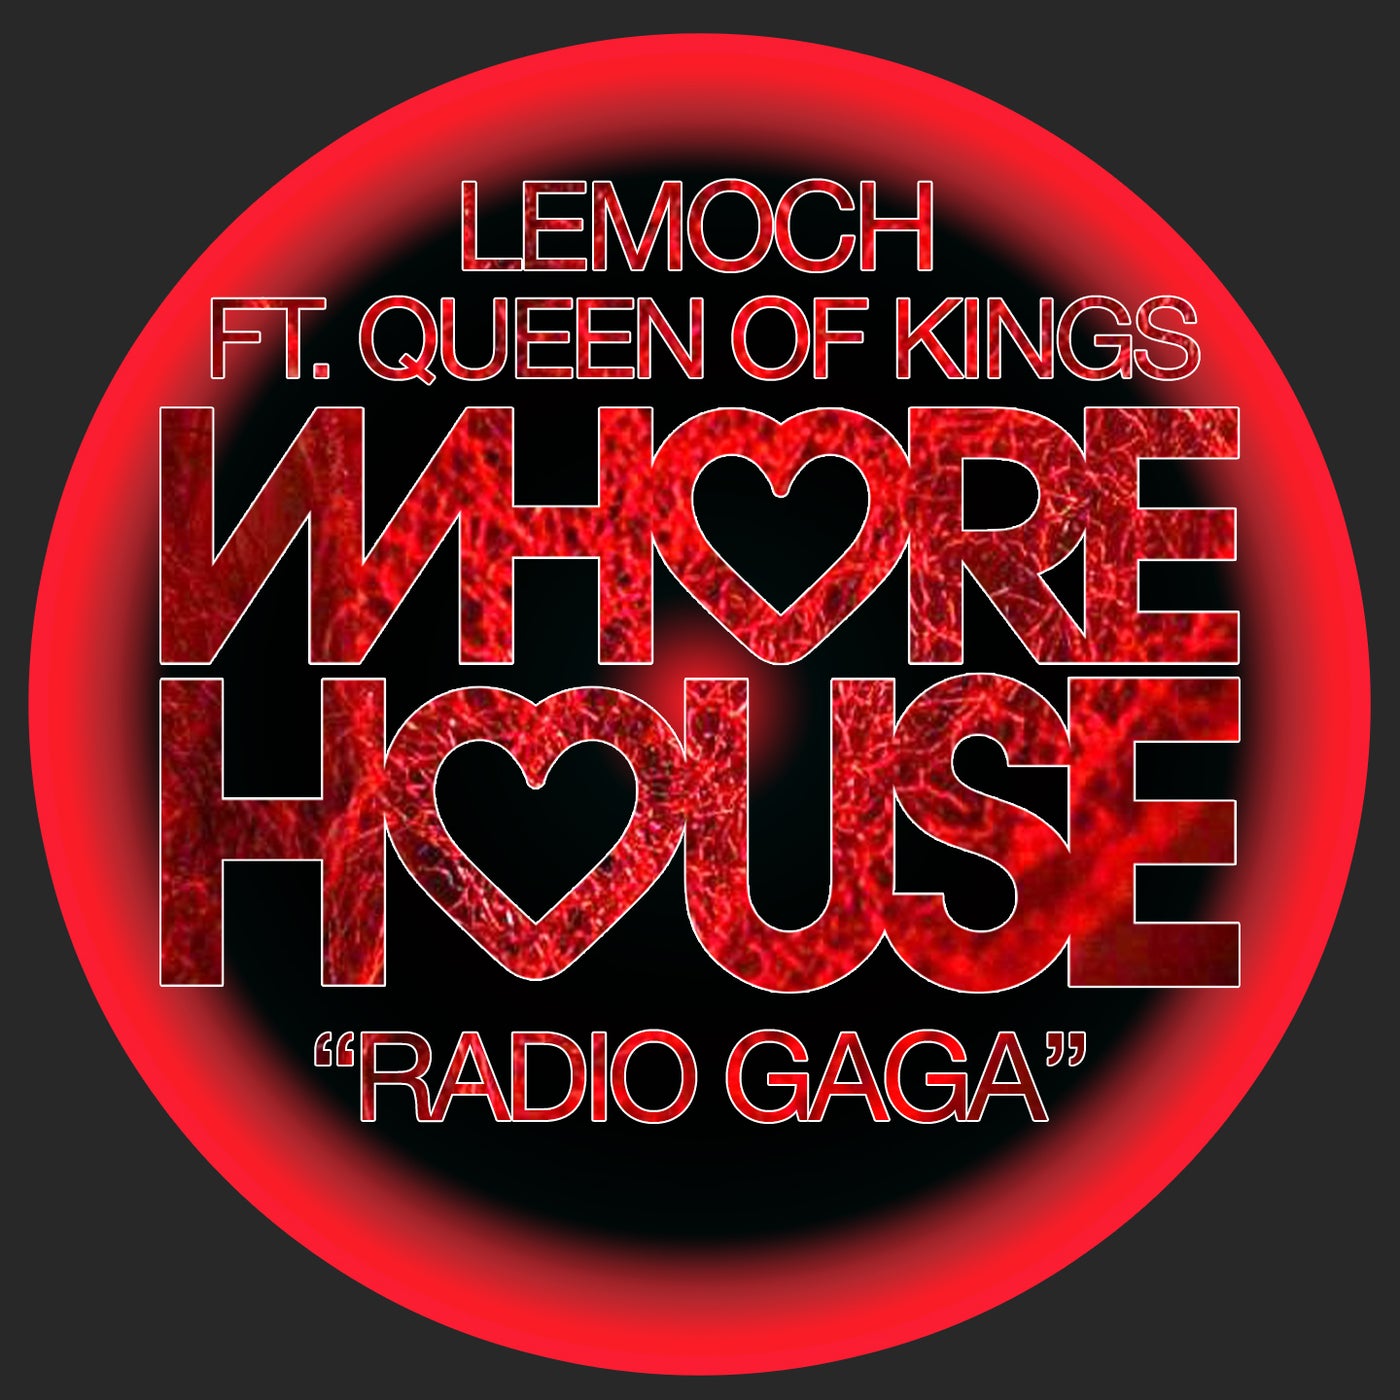 Radio GaGa Featuring Queen Of Kings